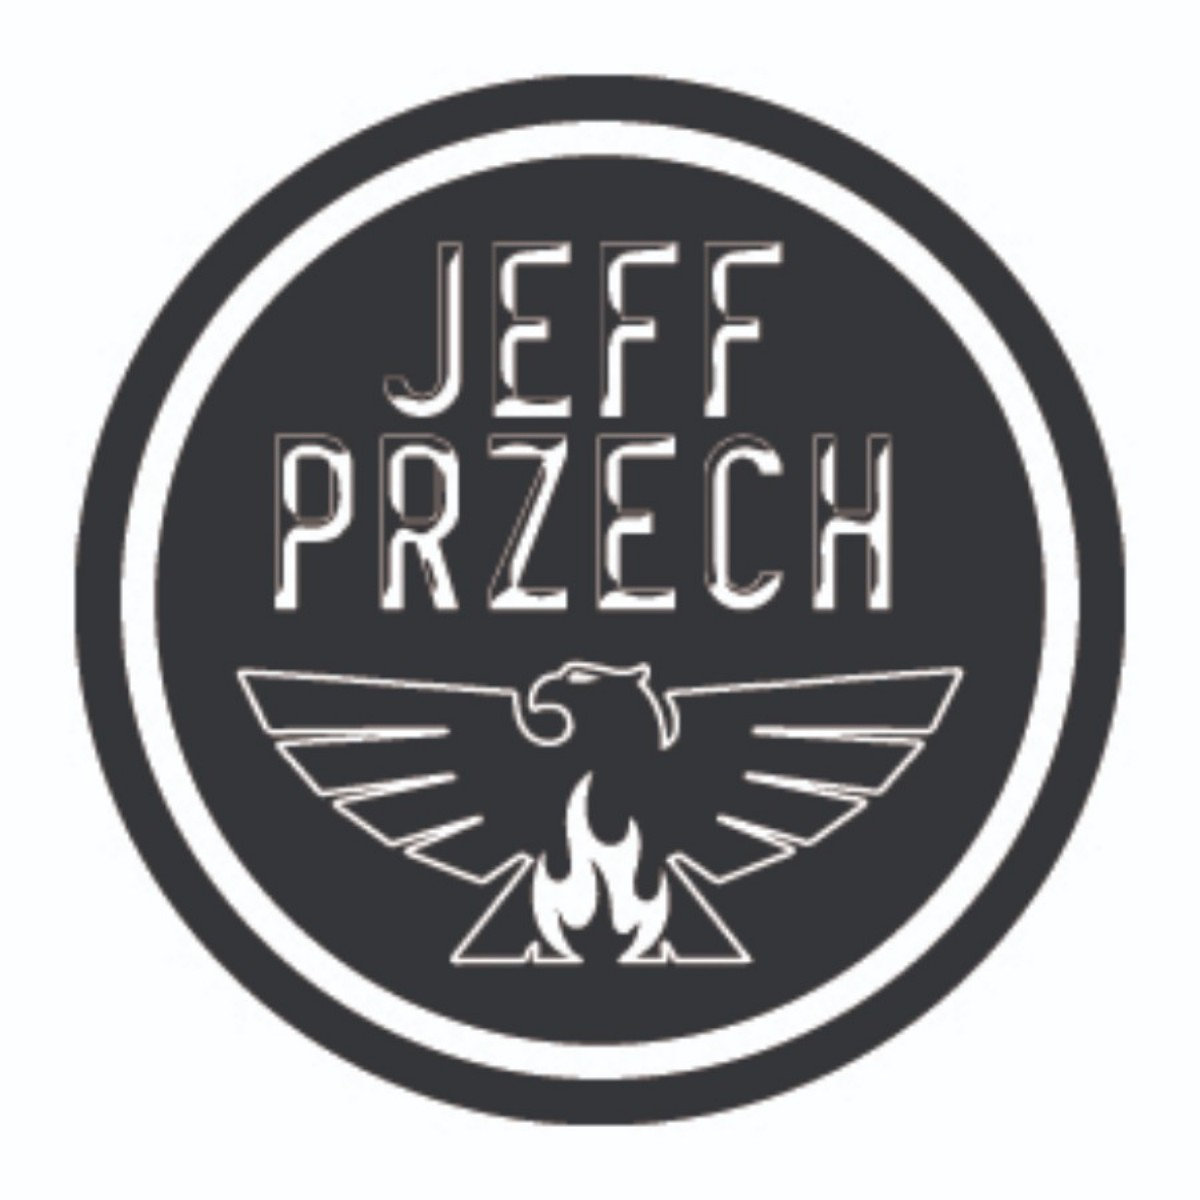 Jeff Przech Phoenix Decal Jeff Przech